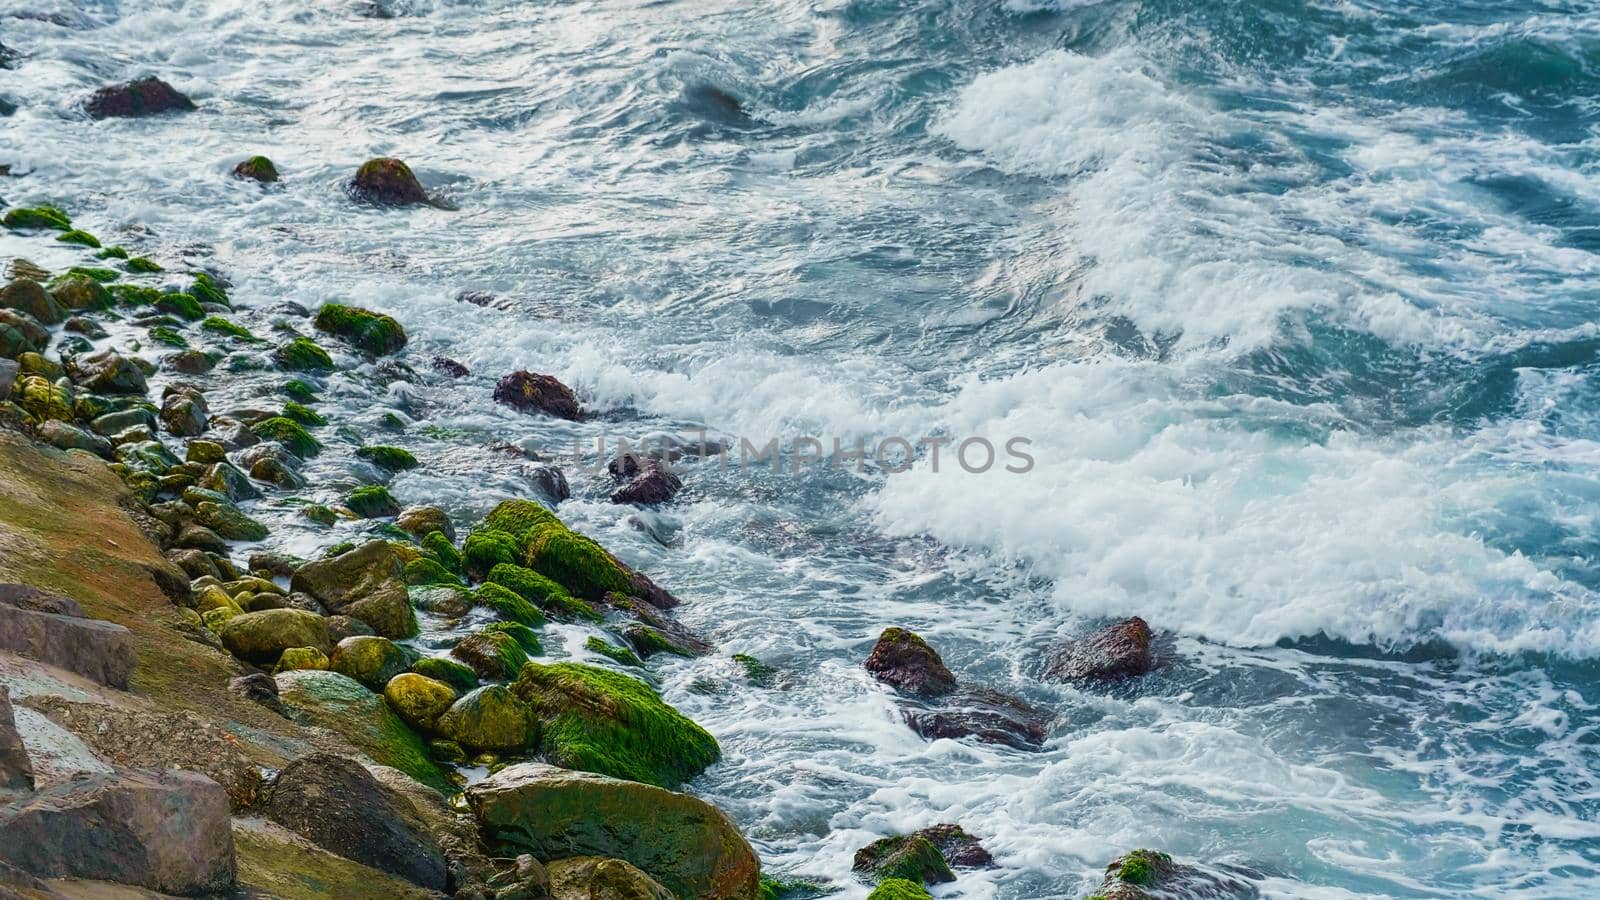 Power of foamy waves breaking over stones. by RecCameraStock